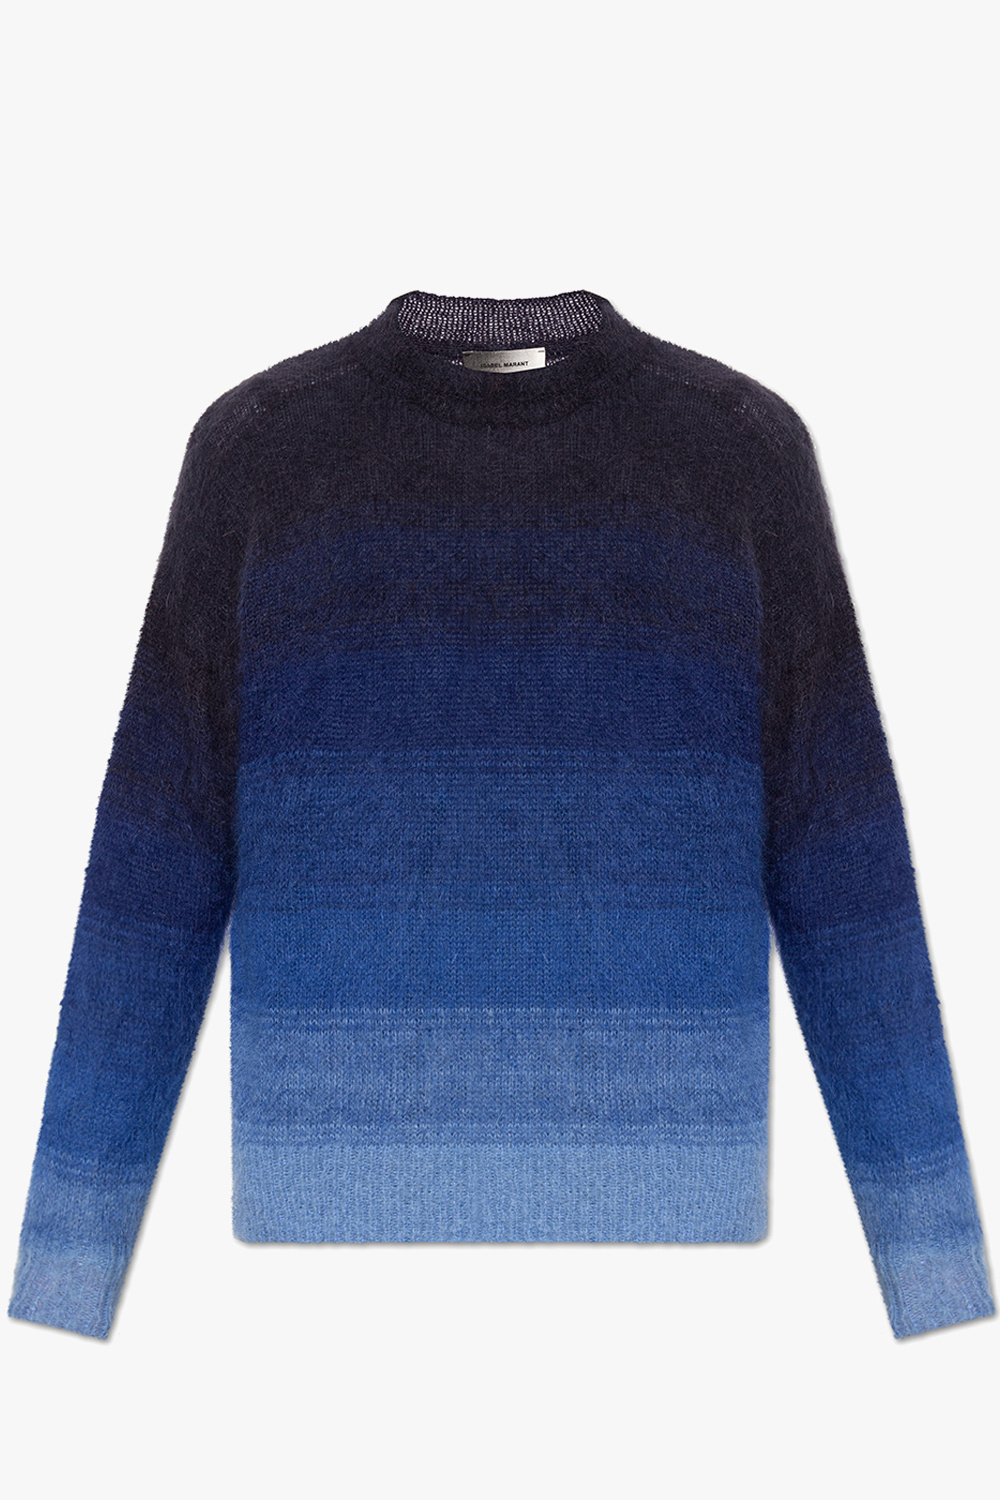 Isabel Marant ‘Drussellh’ sweater